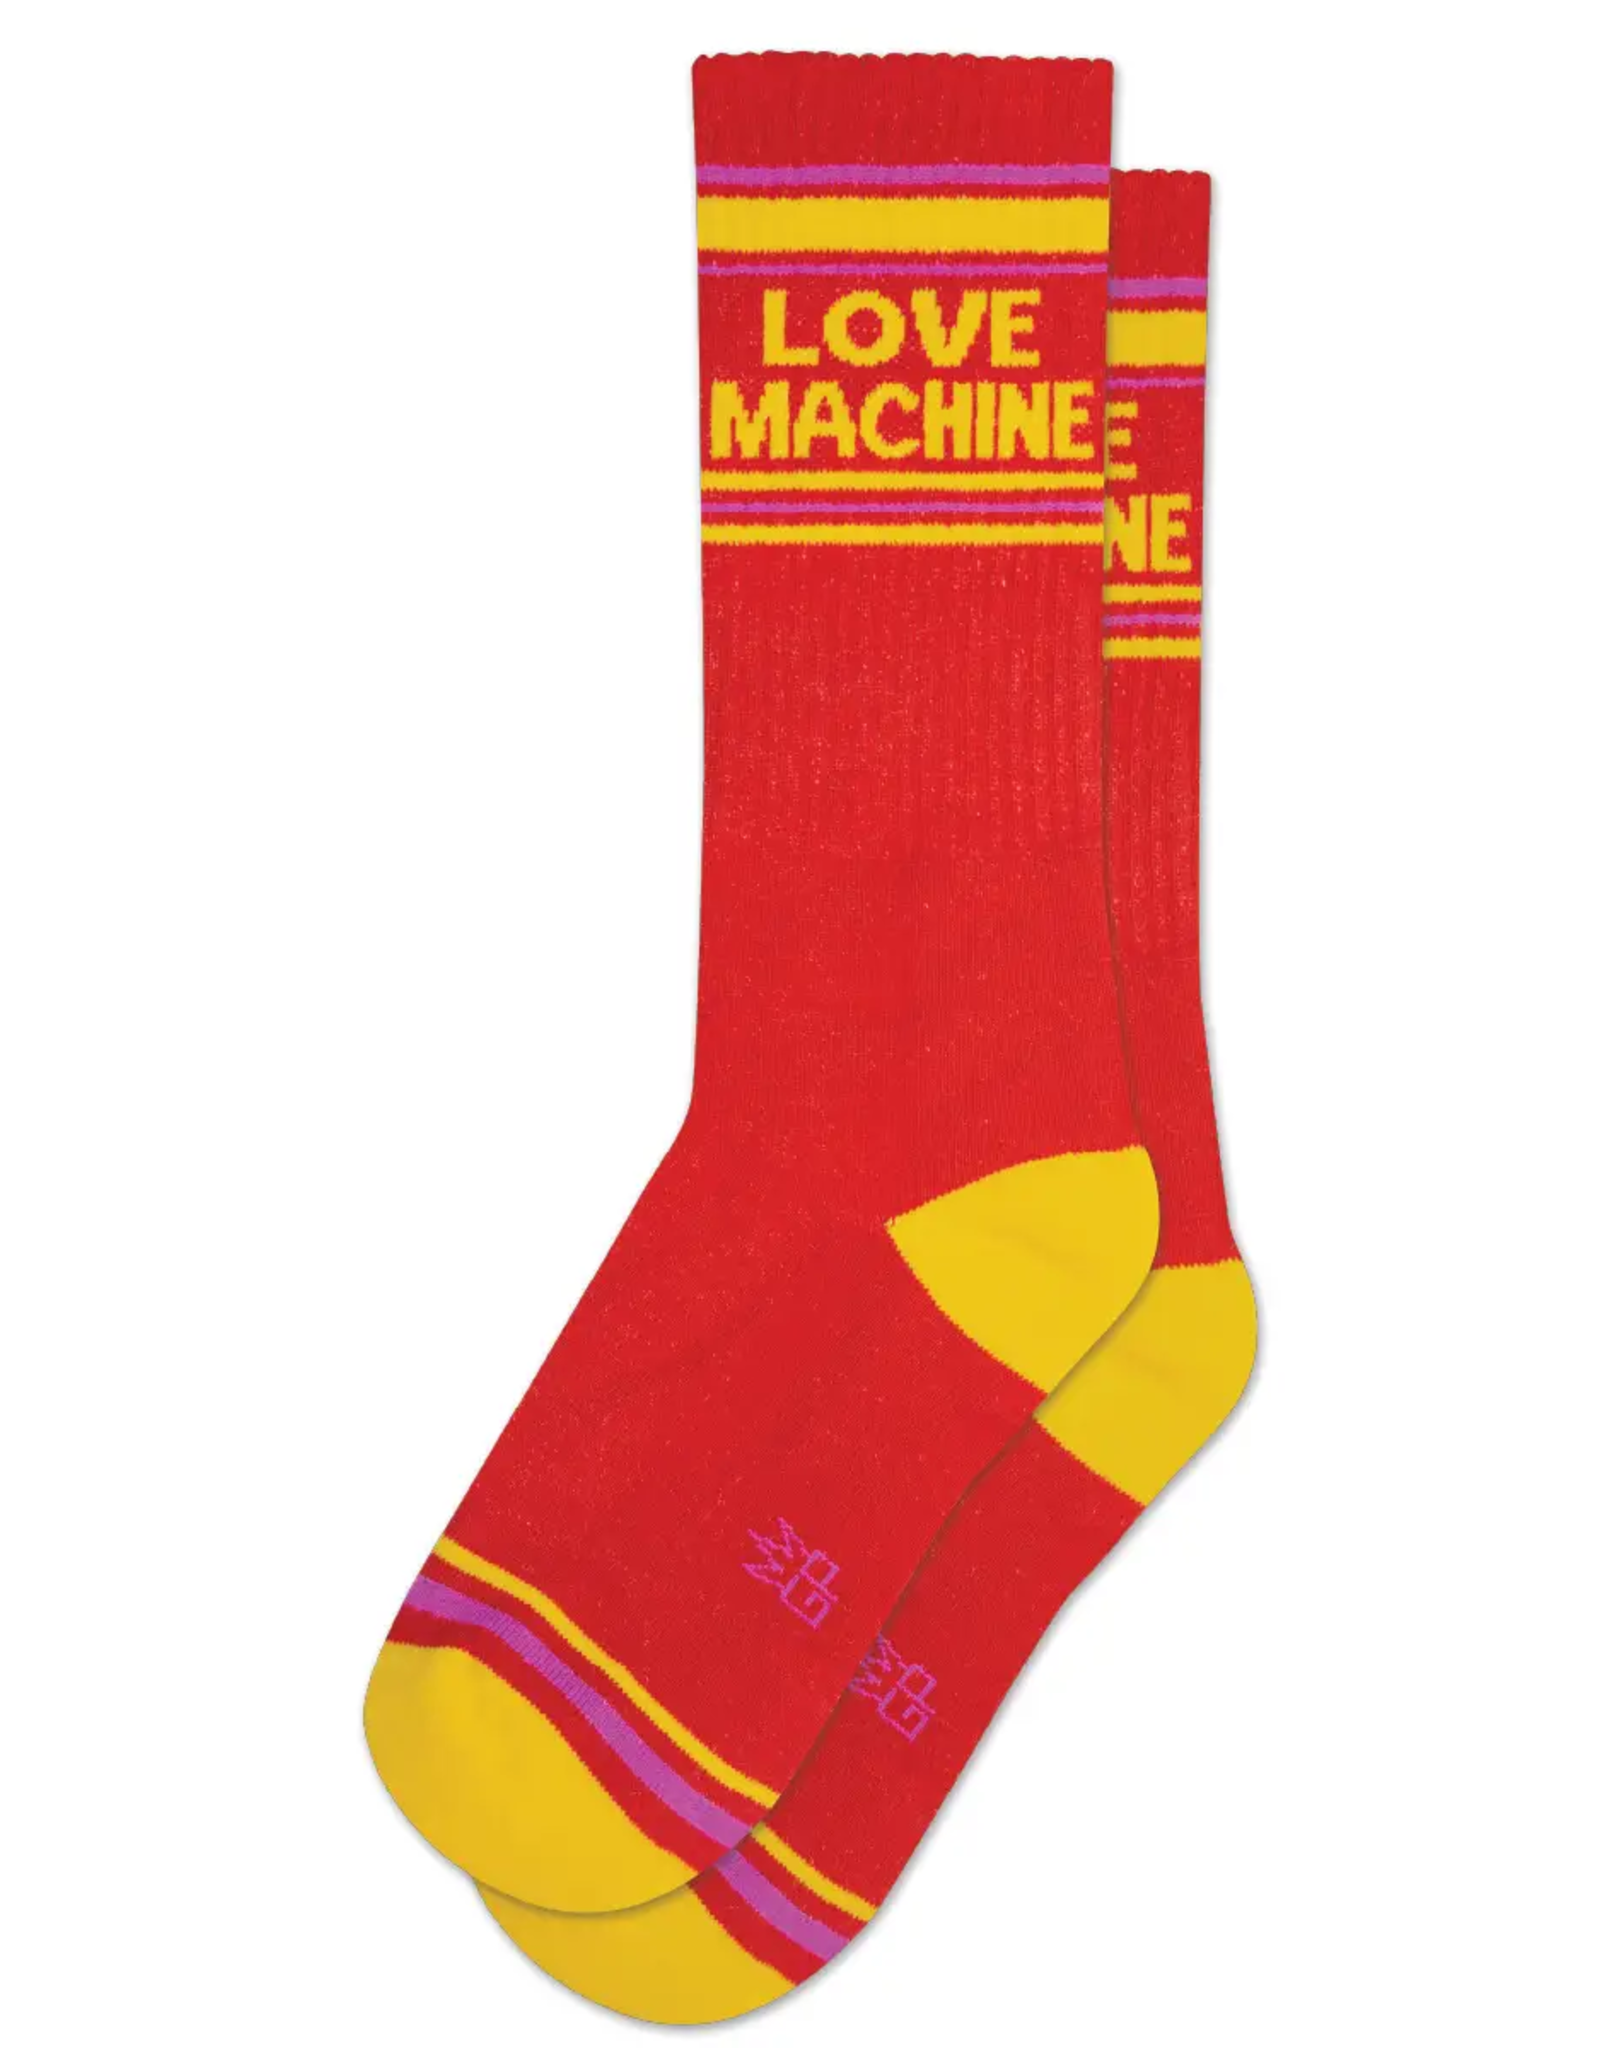 Gumball Poodle Athletic Socks: Love Machine